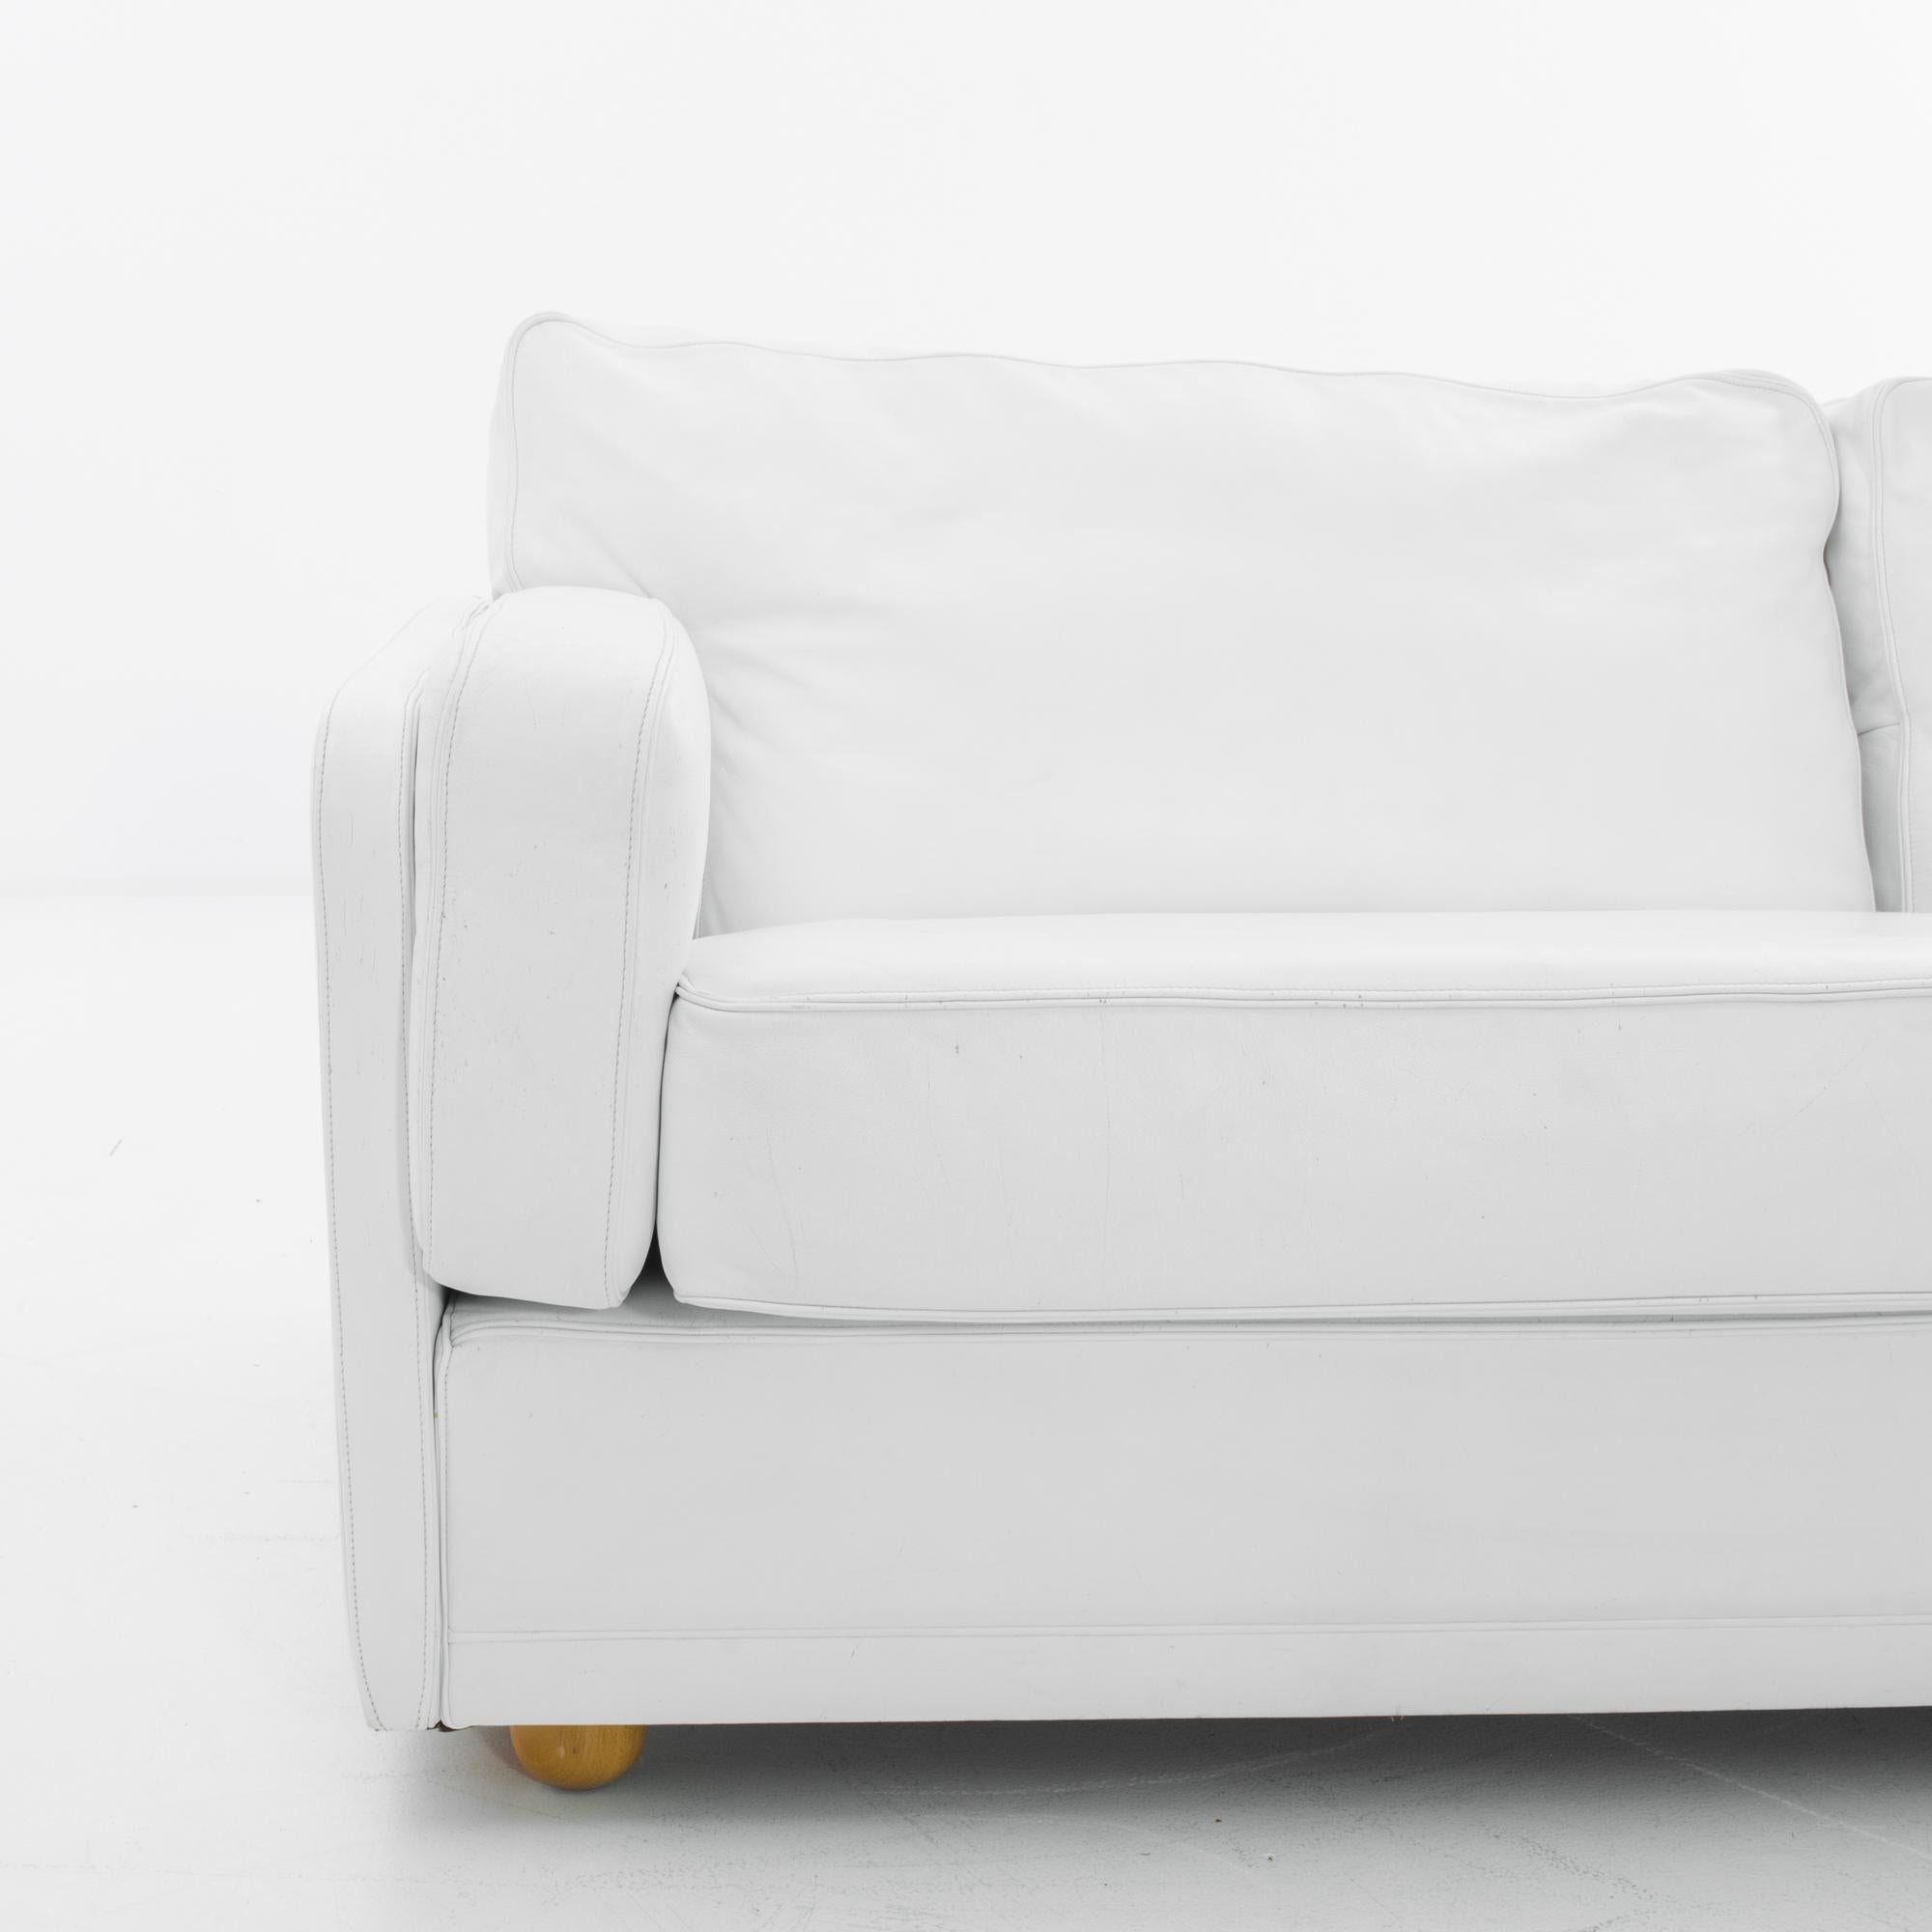 Late 20th Century 1980s Poltrona Frau White Leather Sofa  For Sale